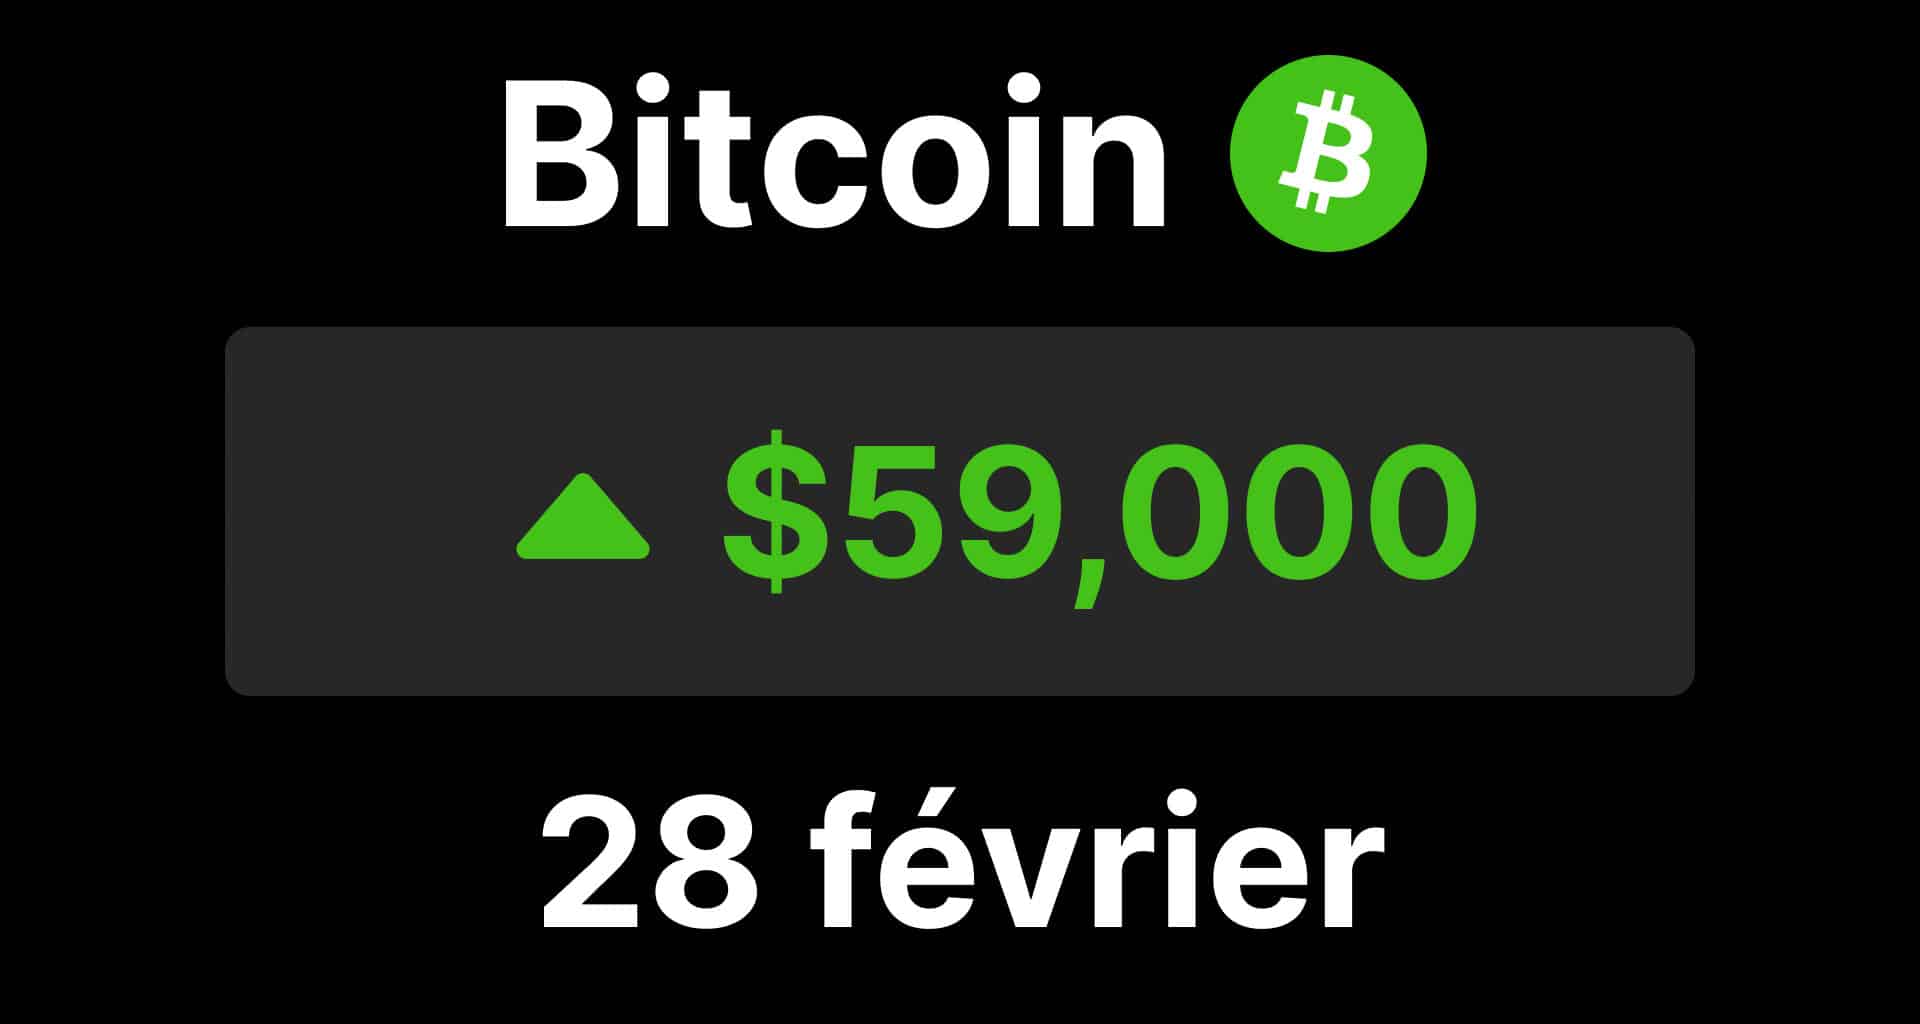 btc bitcoin 59 000